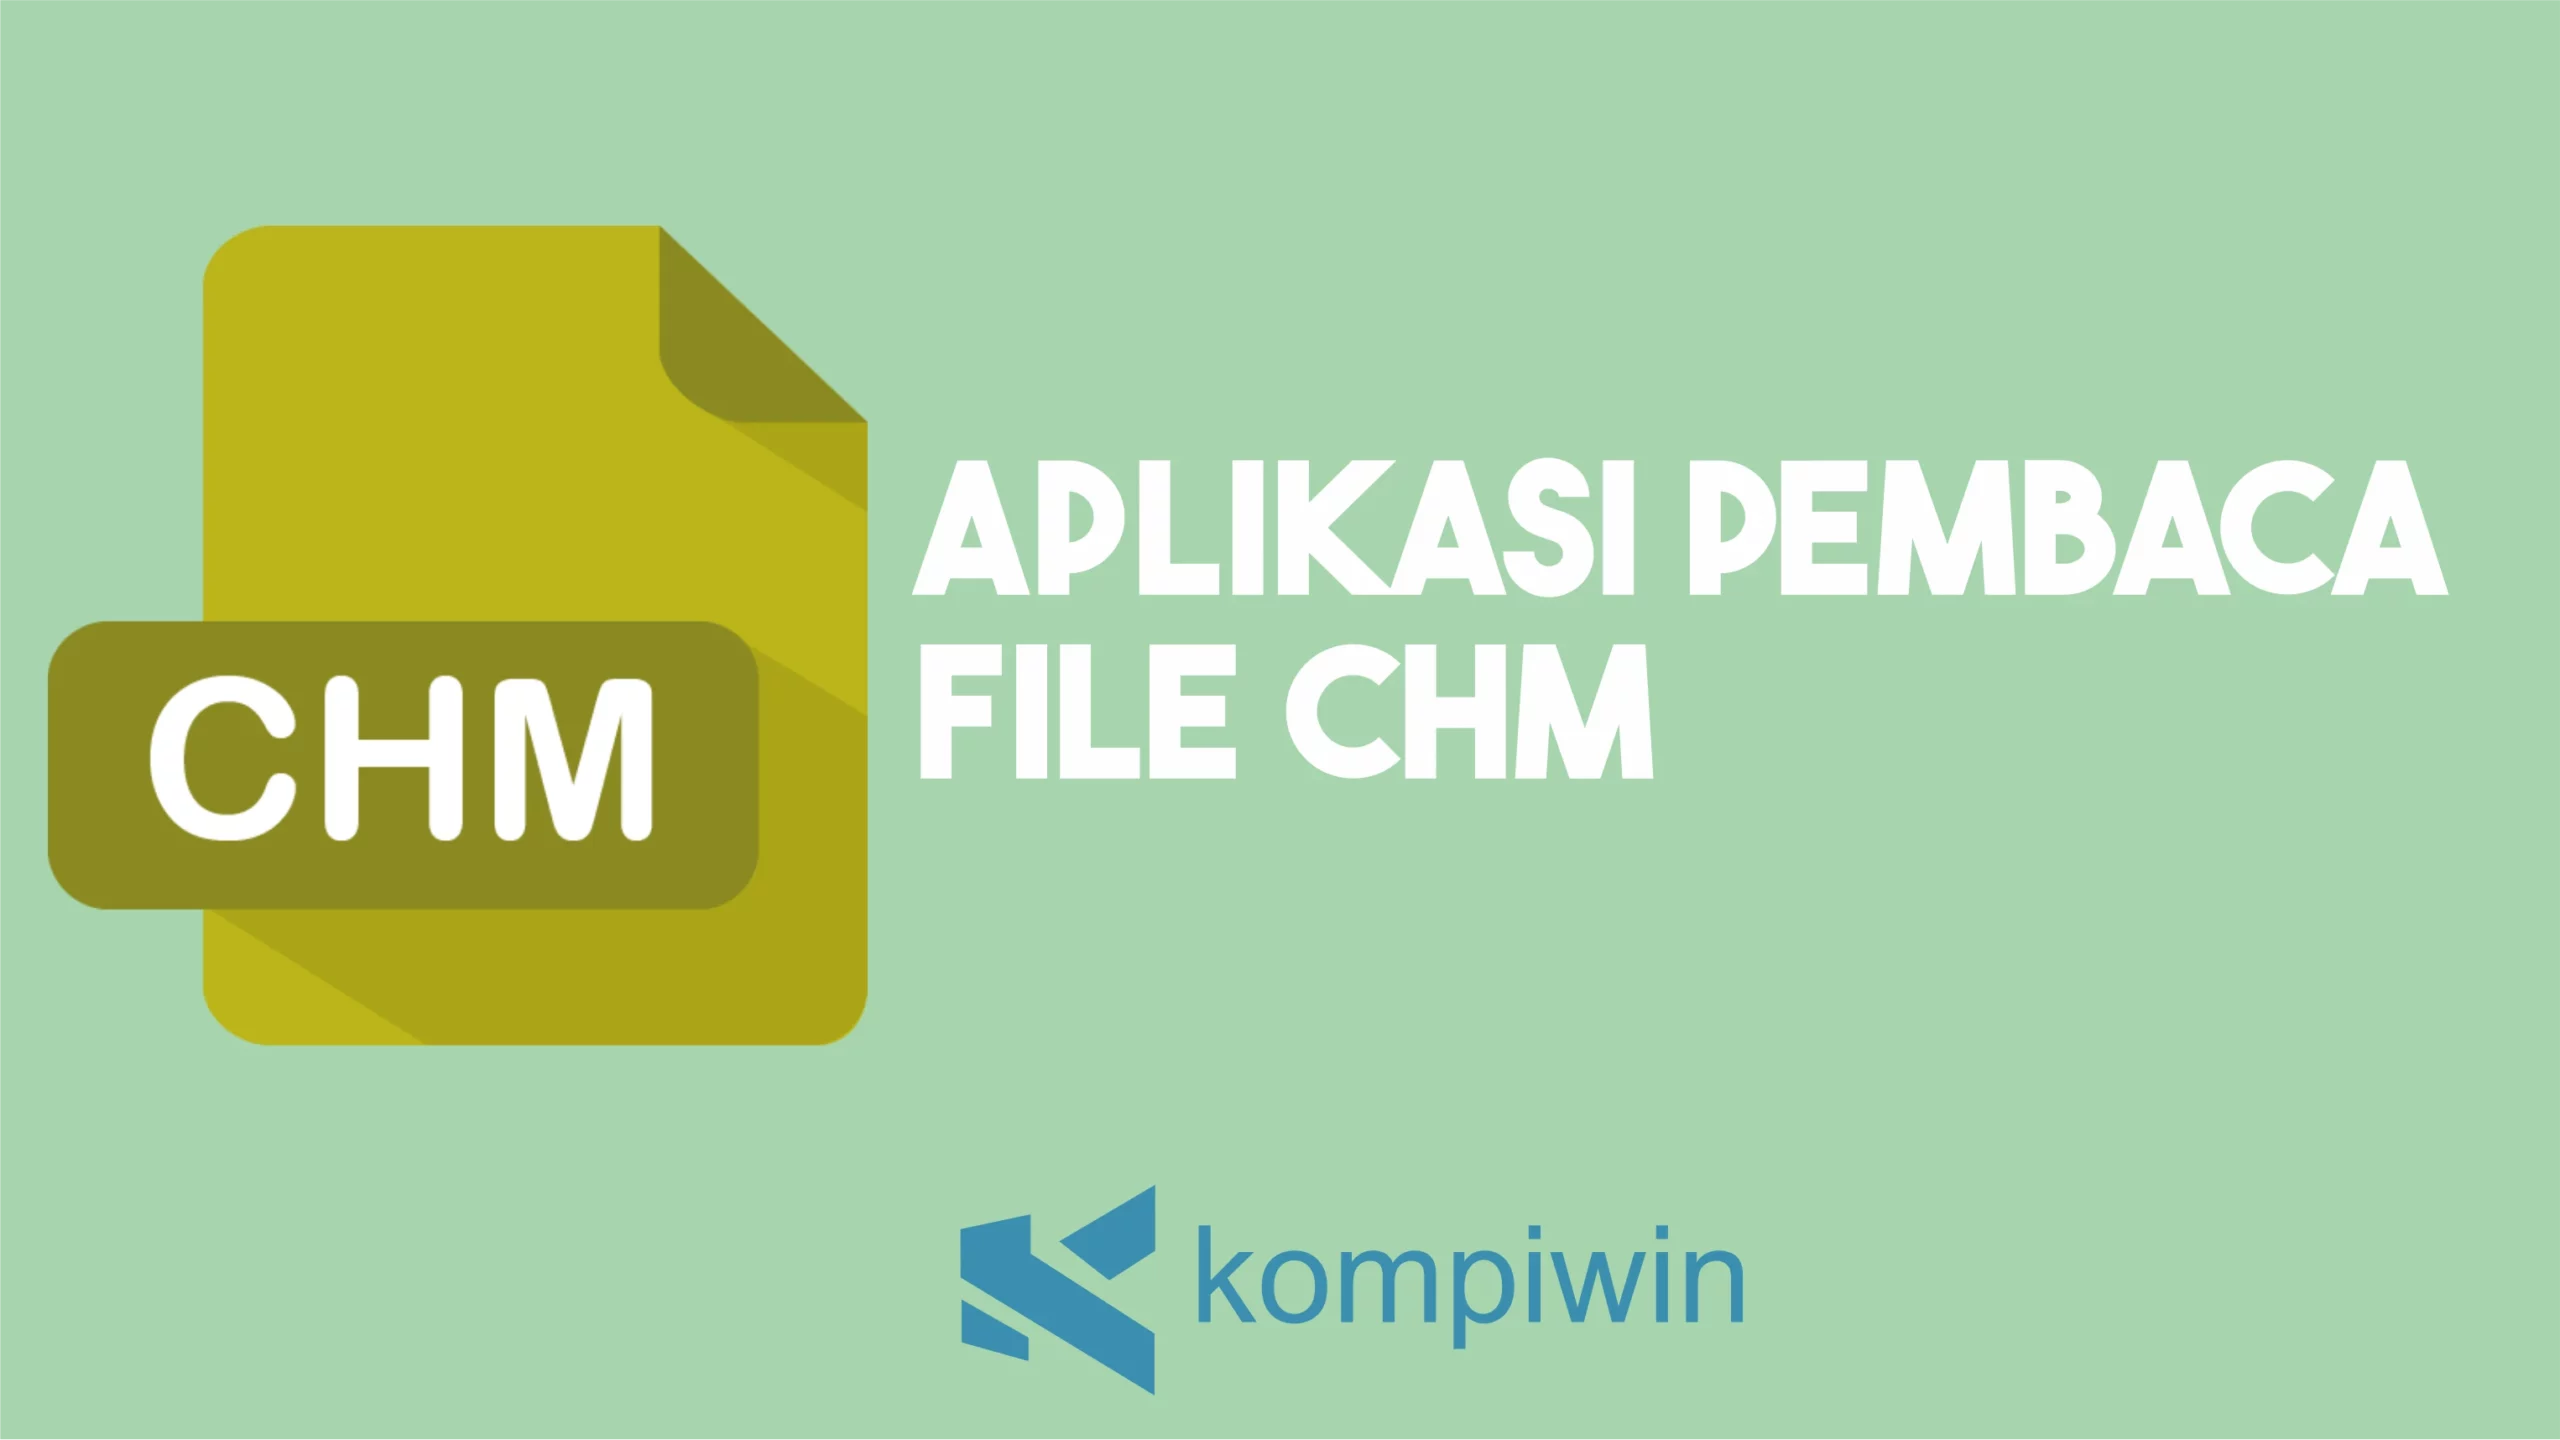 Aplikasi Pembaca File CHM